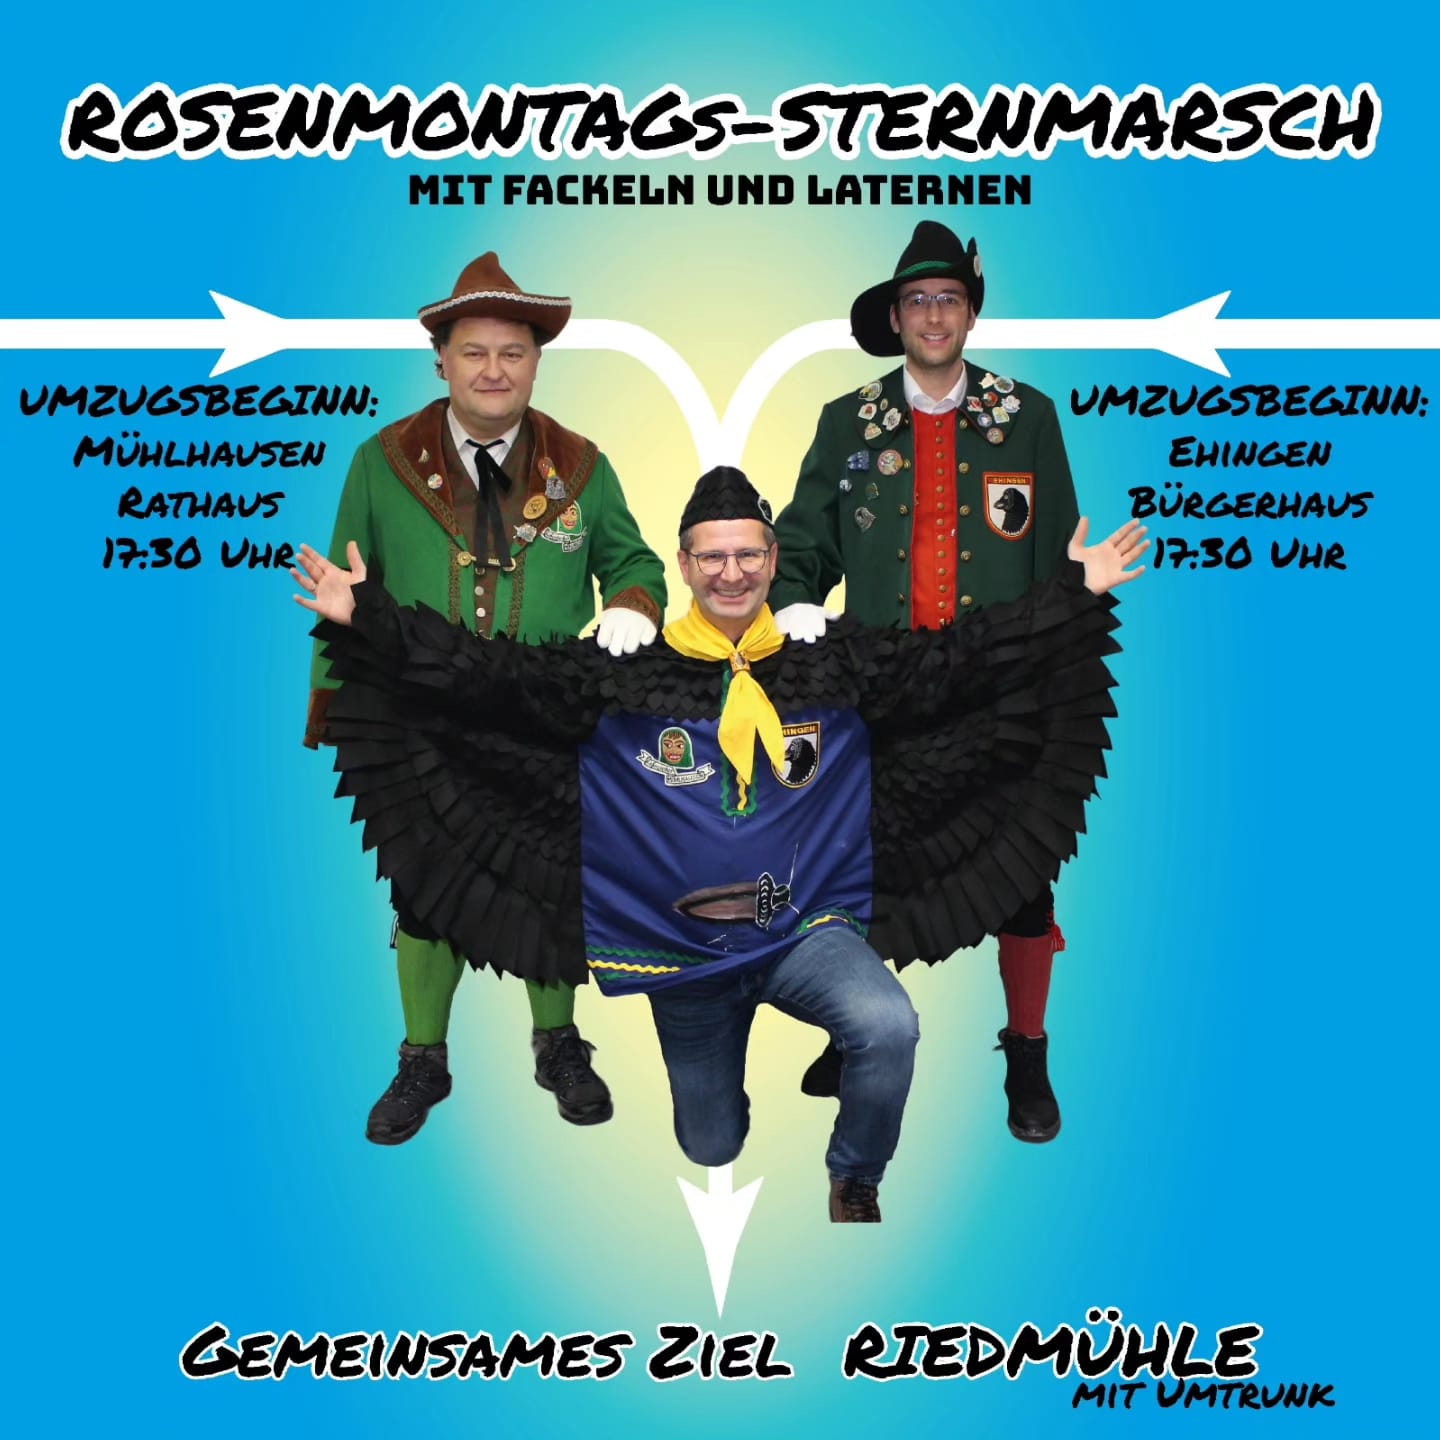 Rosenmontags - Sternenmarsch